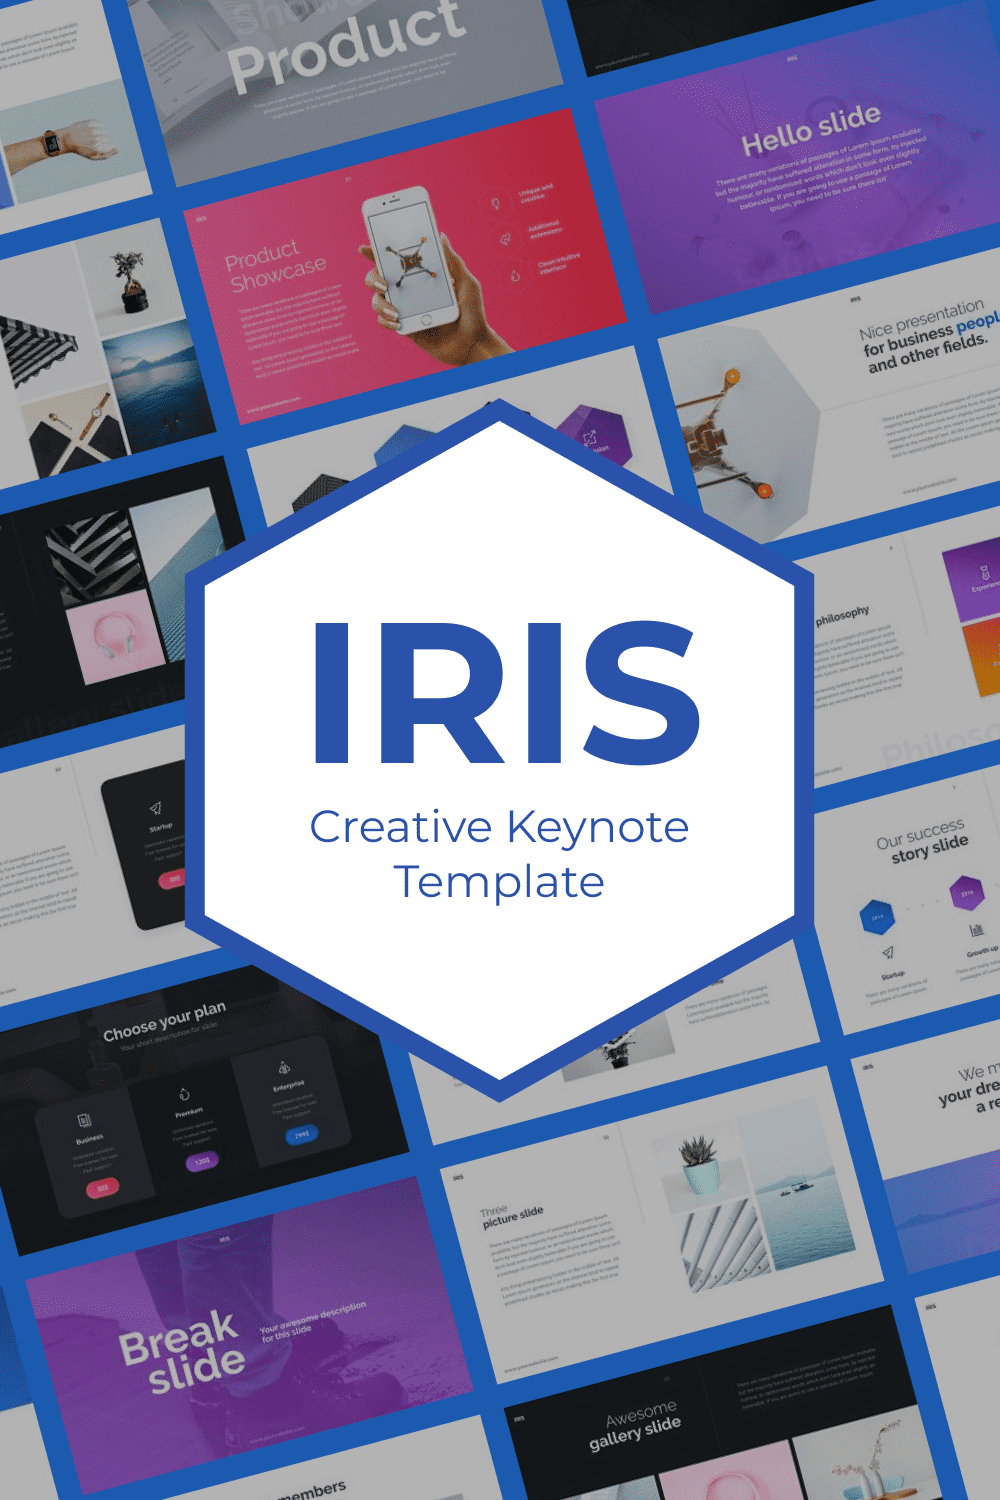 IRIS Creative Keynote Template - Pinterest.